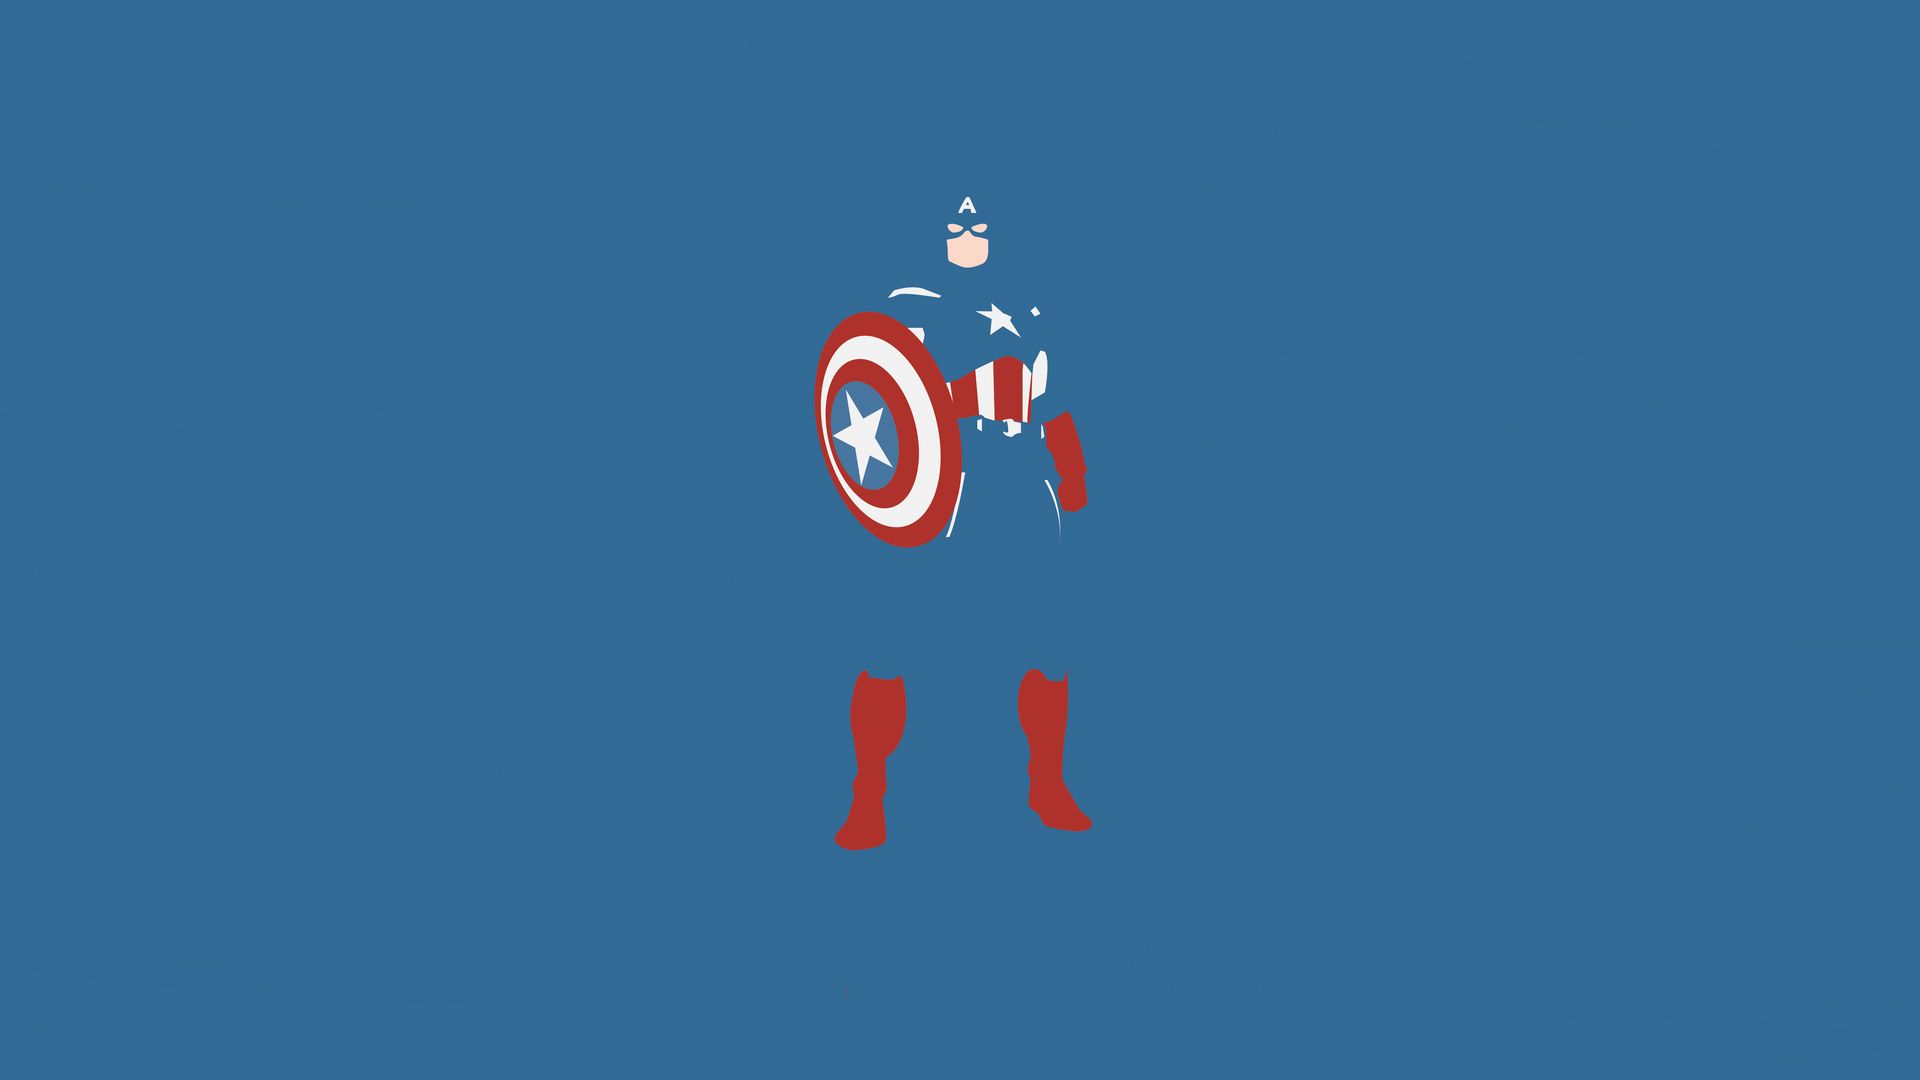 Captain America Marvel Comics Minimalism Wallpaper, HD Minimalist 4K Wallpaper, Image, Photo and Background